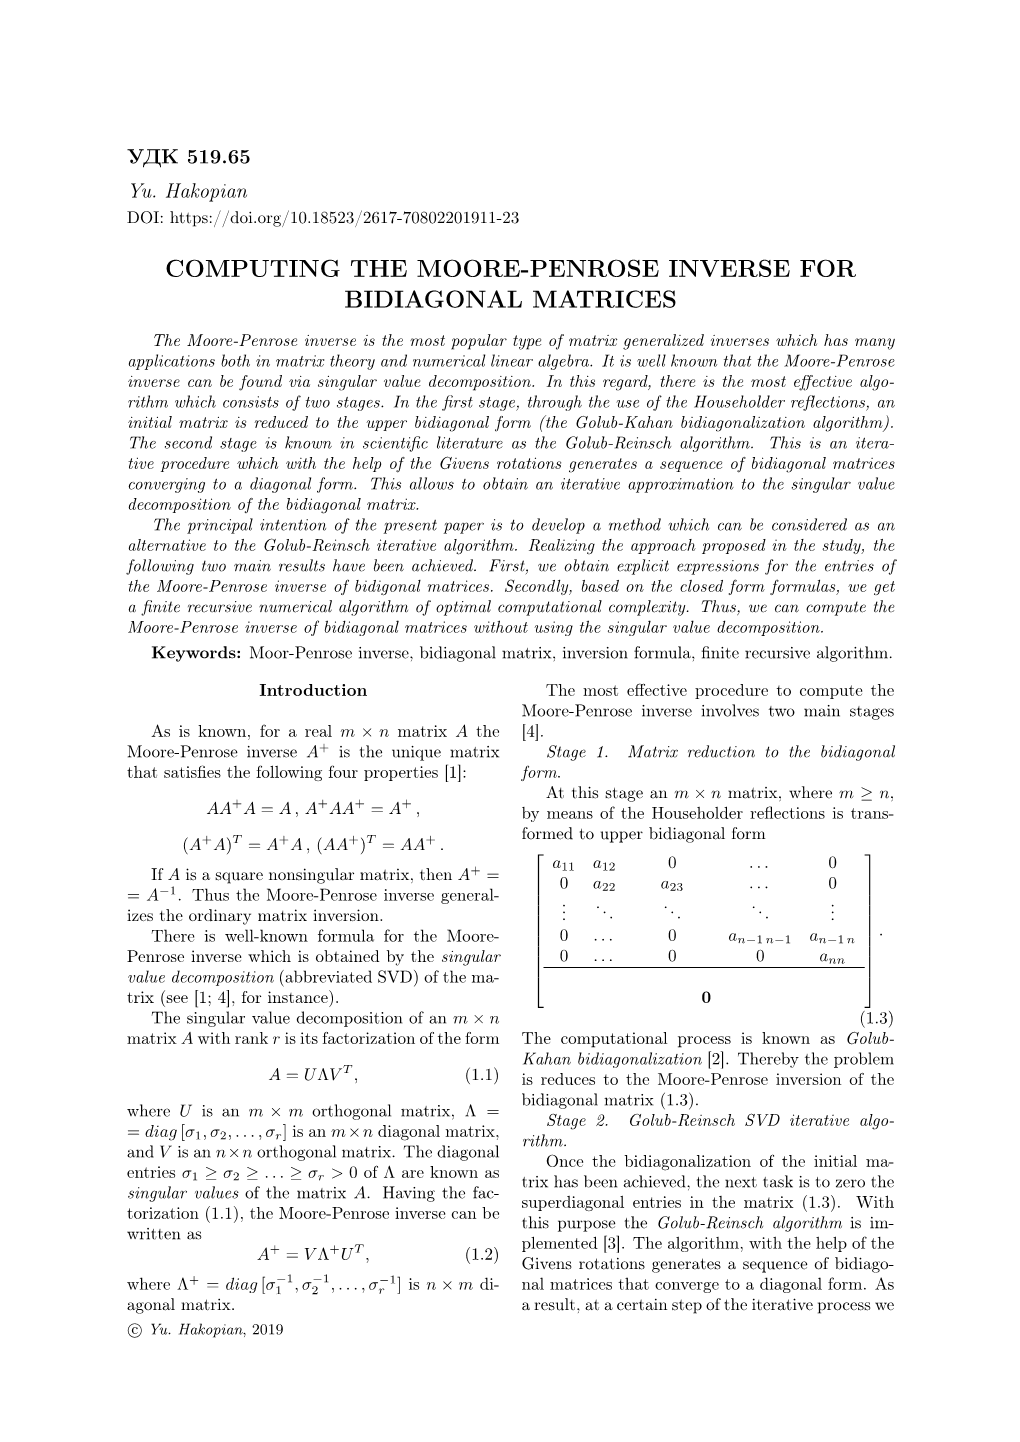 Computing the Moore-Penrose Inverse for Bidiagonal Matrices